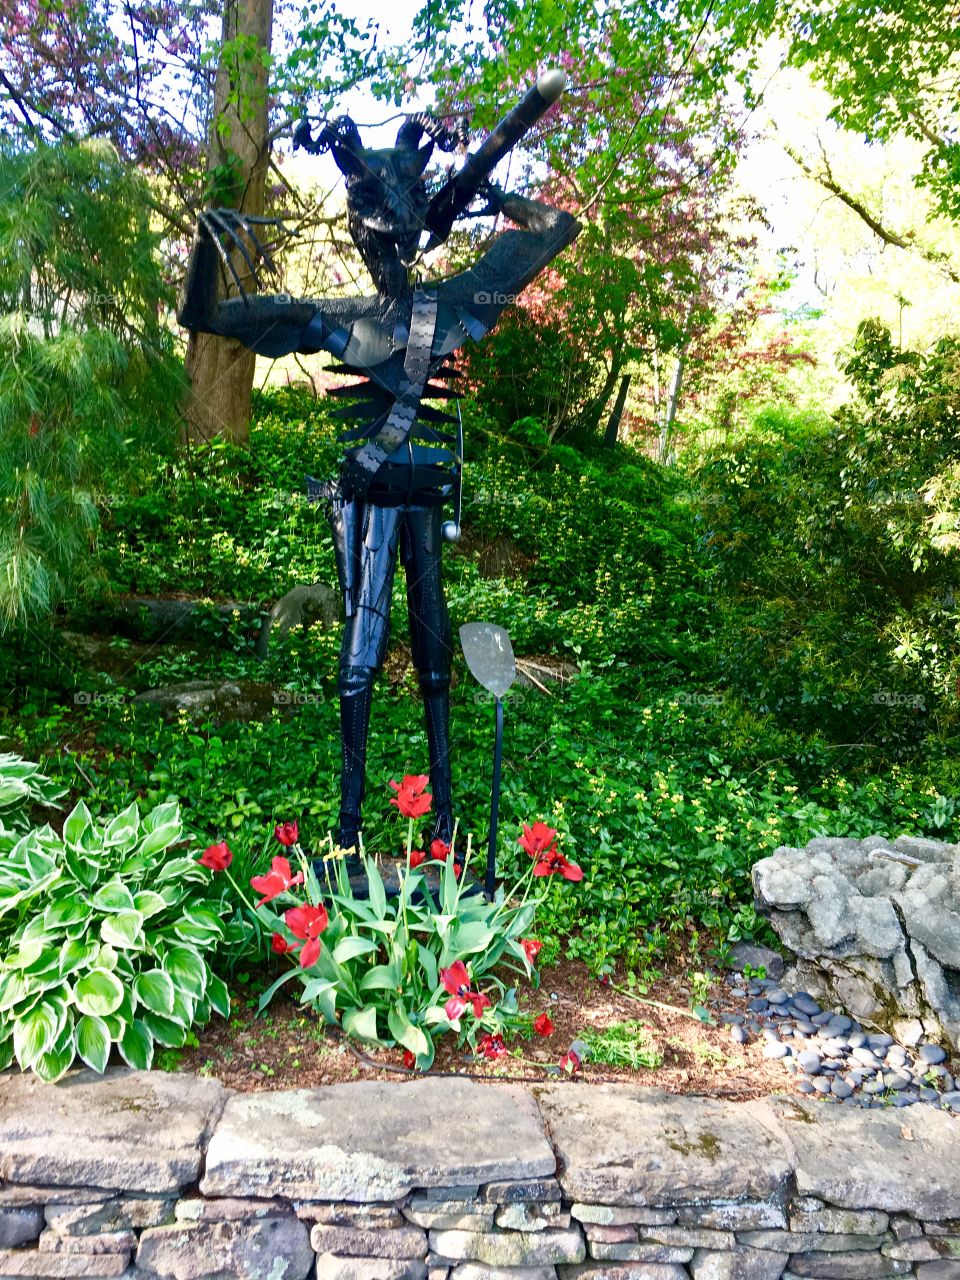 Black Satanic statue In a green garden during spring